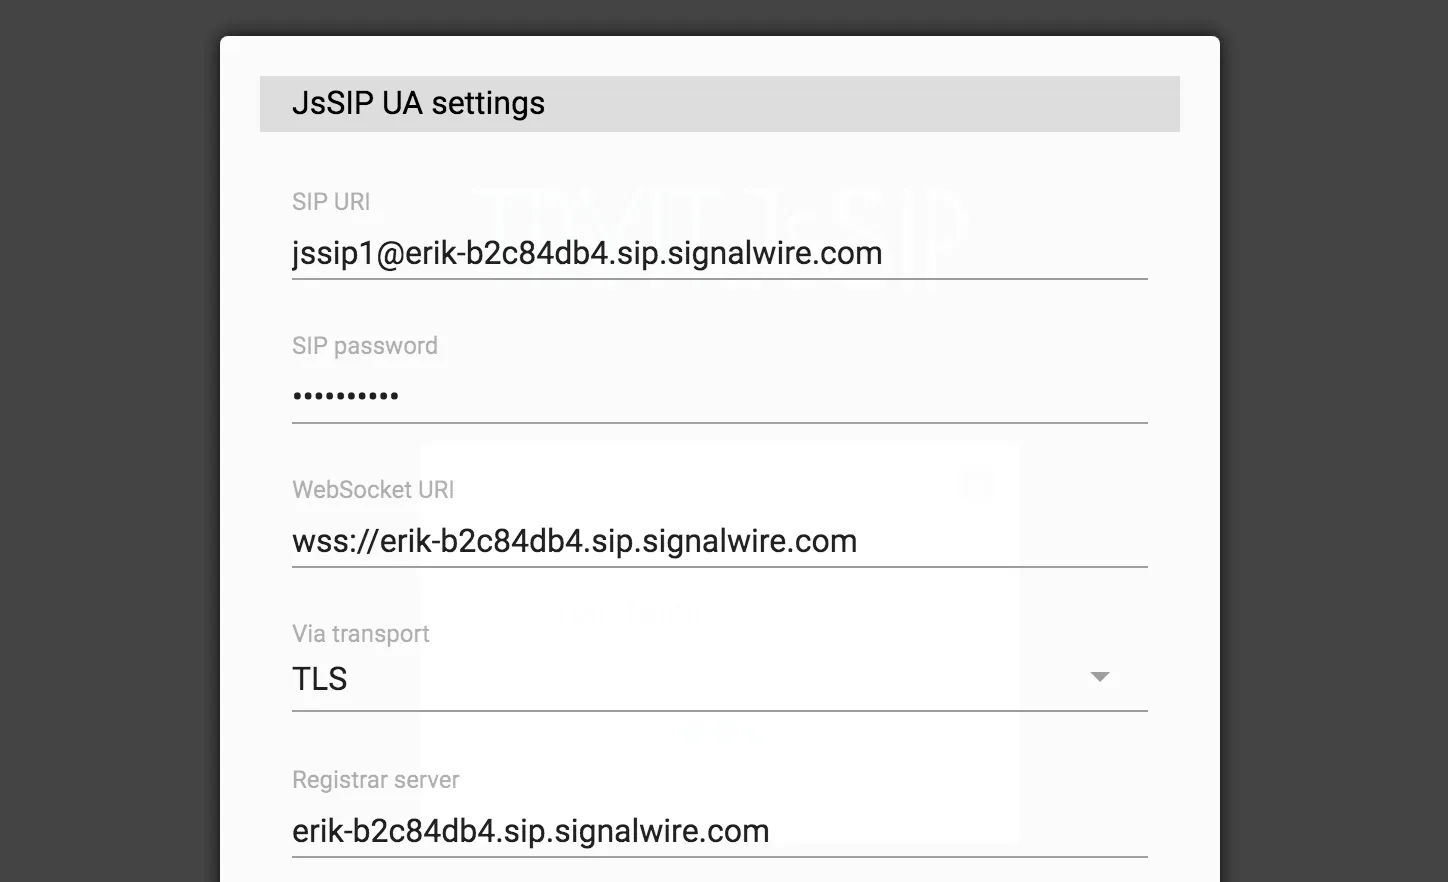 A screenshot of the JsSIP UA settings pane, with fields for SIP URI, SIP Password, WebSocket URI, Via Transport, and Registrar Server.